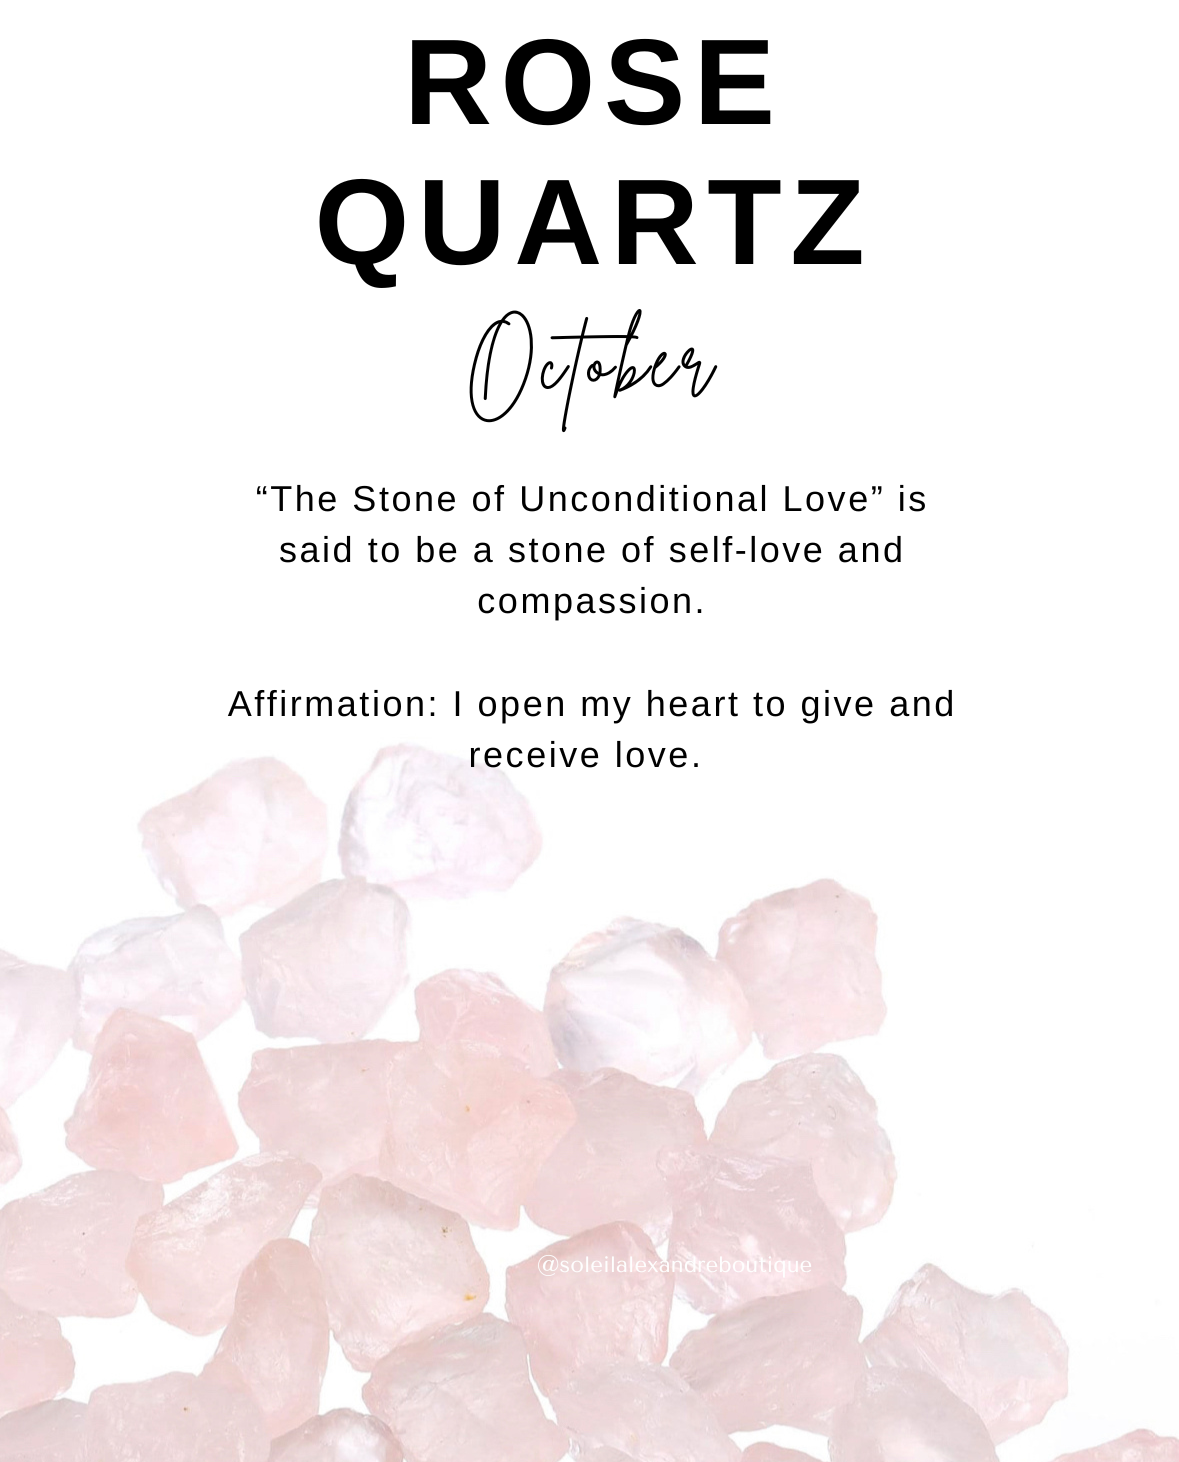 Rose Quartz information card with affirmation.